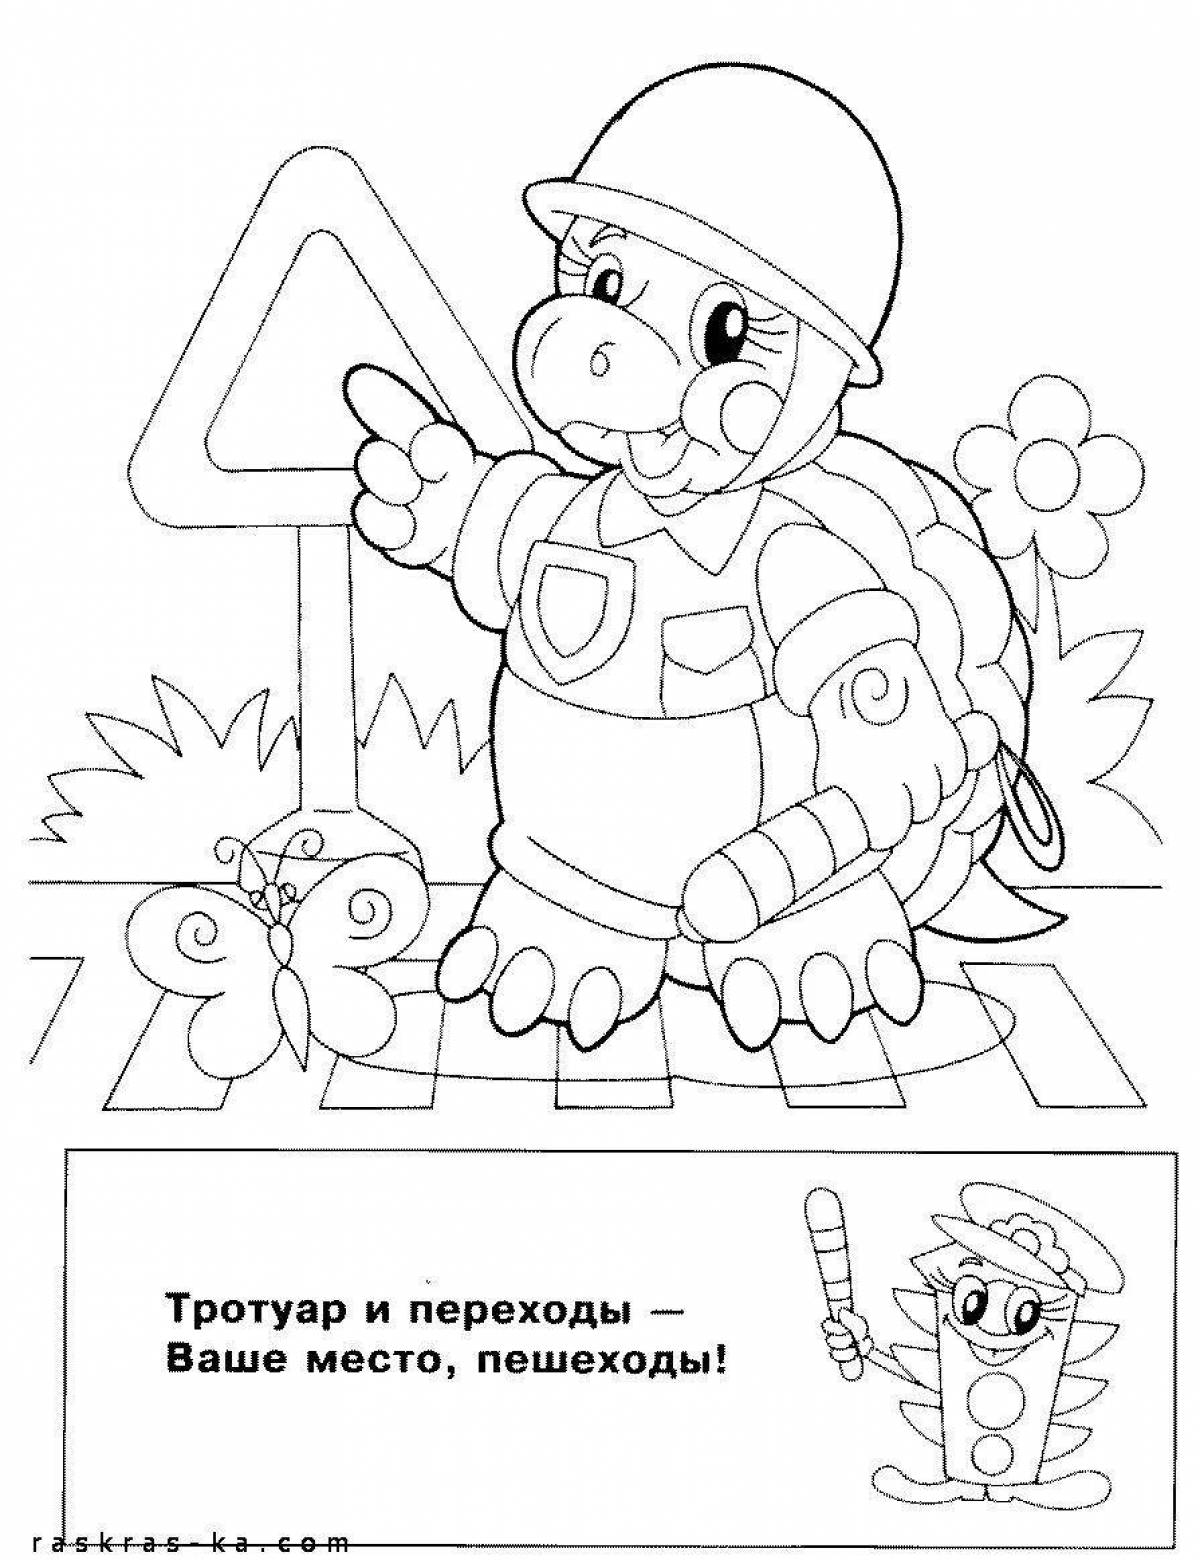 Information coloring book traffic rules for kindergarten